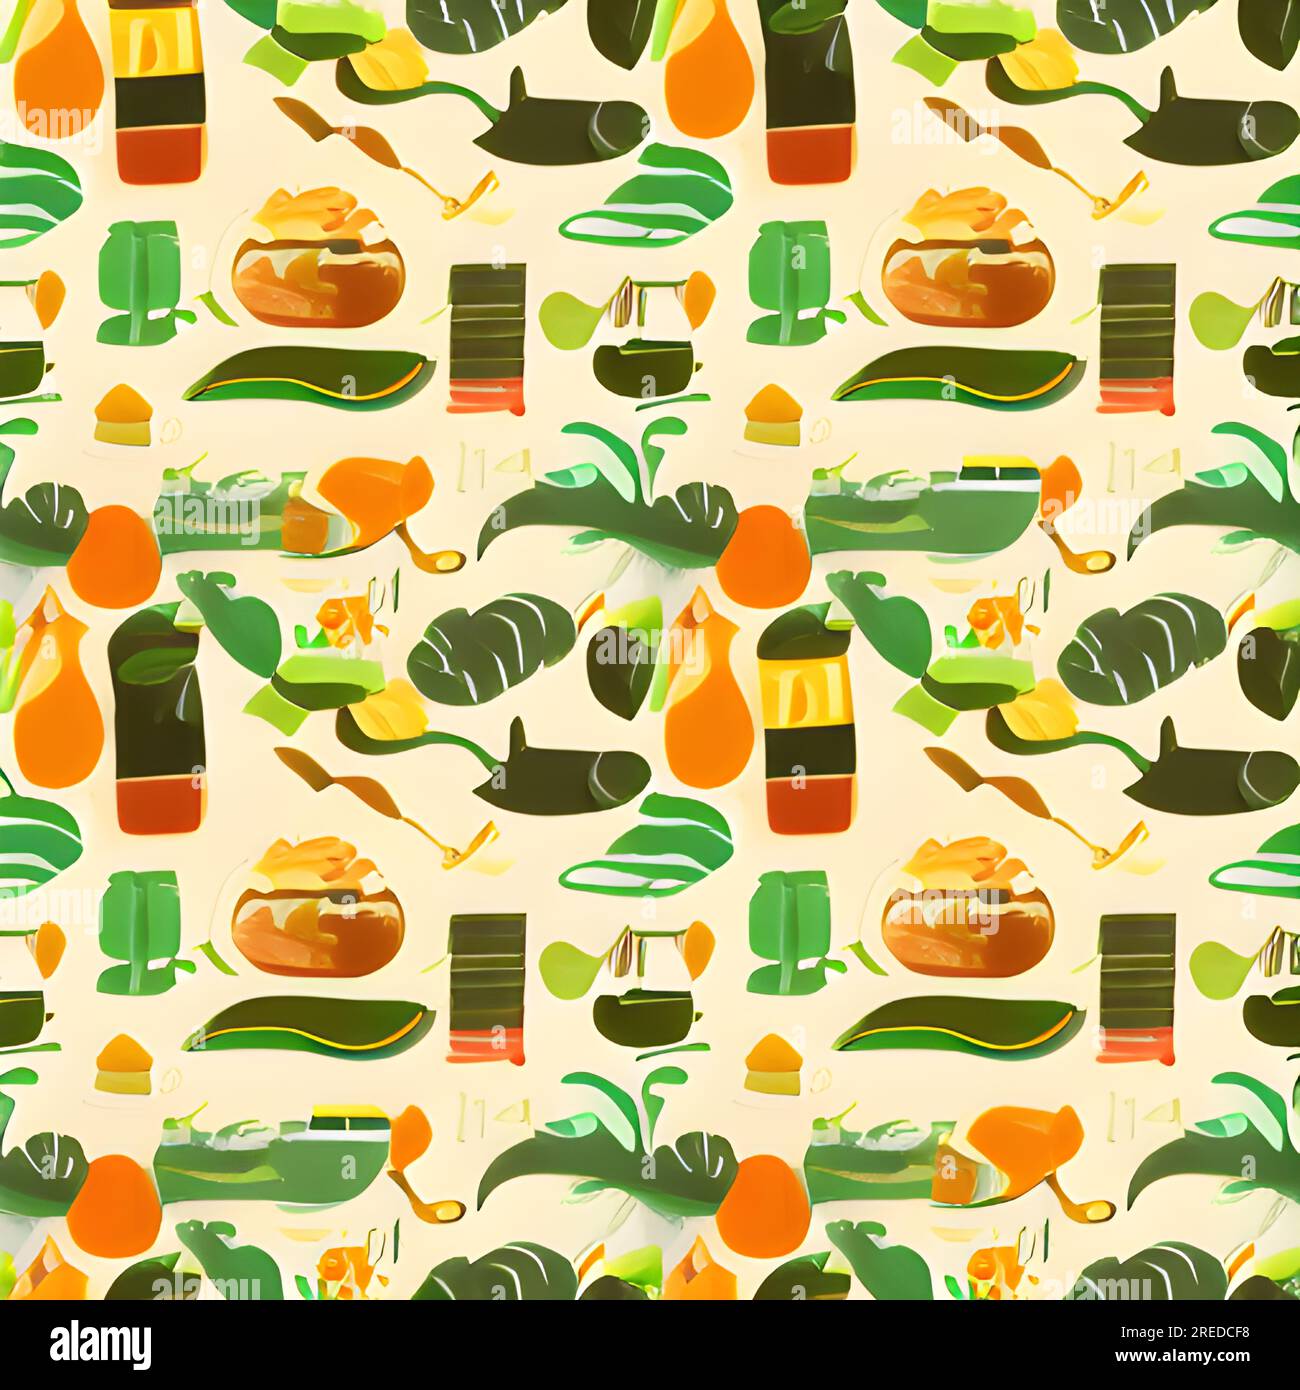 vintage food wallpaper